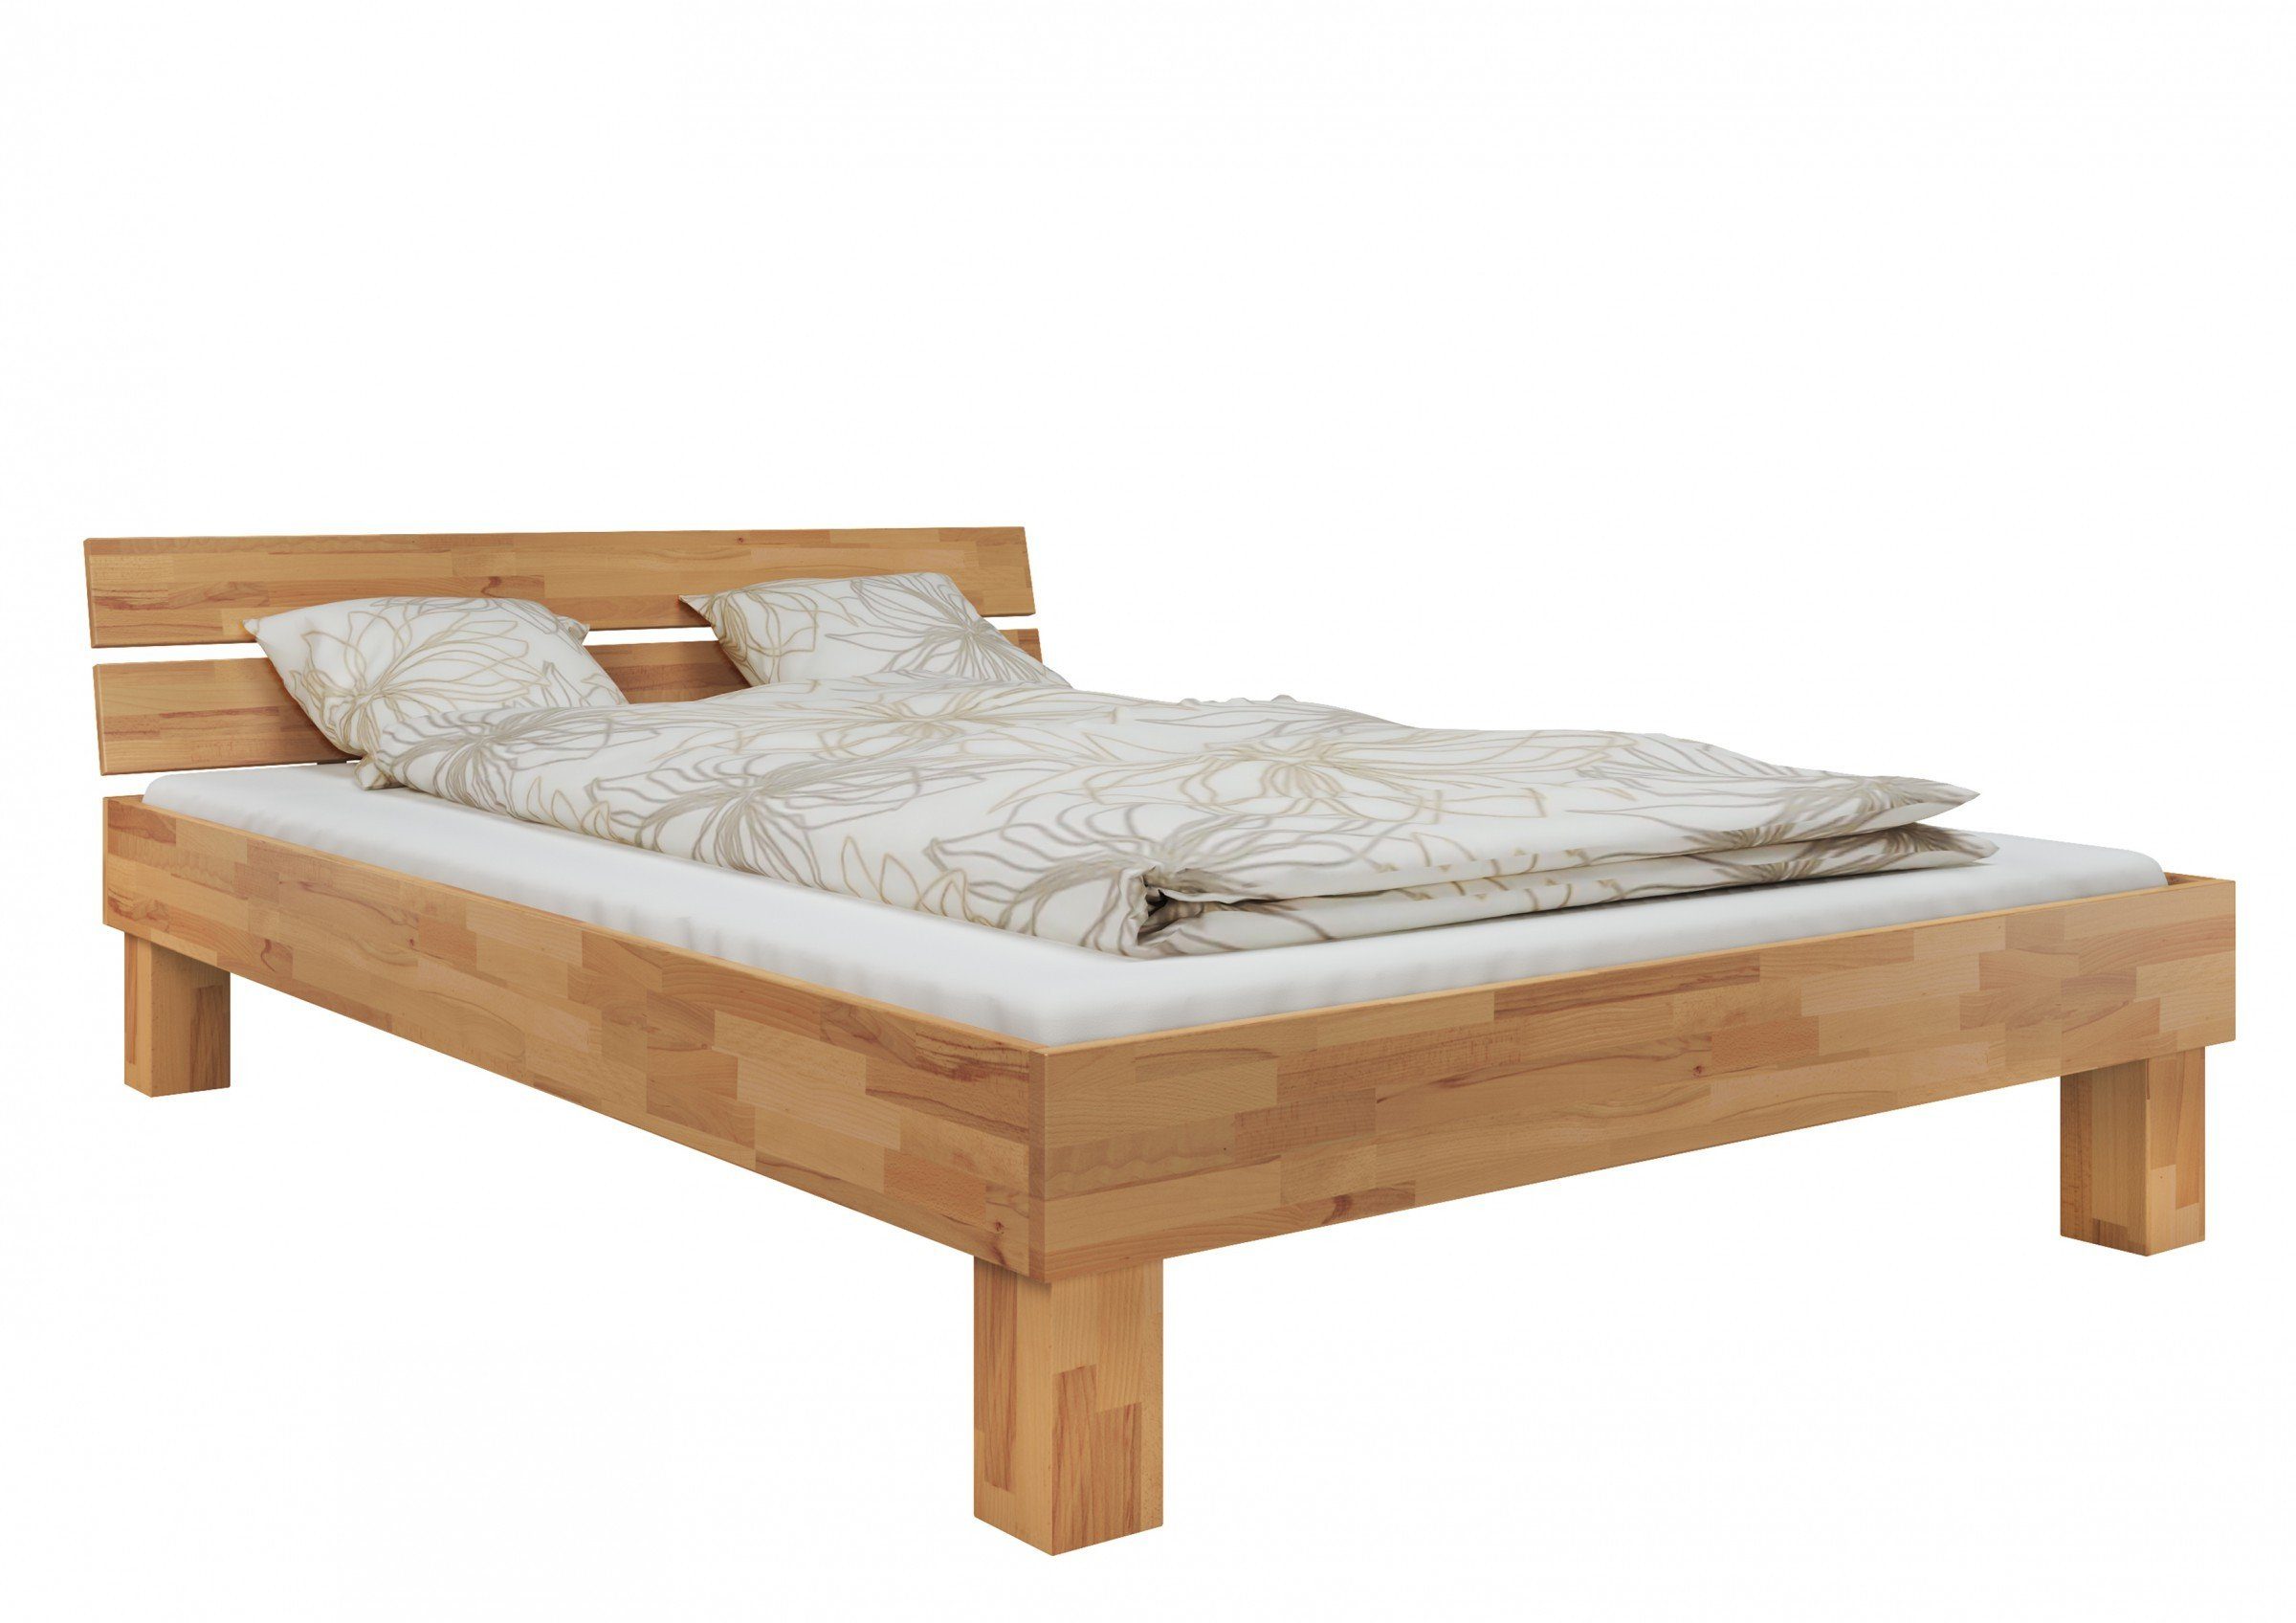 Doppelbett Bett Rollrost, ERST-HOLZ Buchefarblos ohne lackiert 160x200 natur Buche